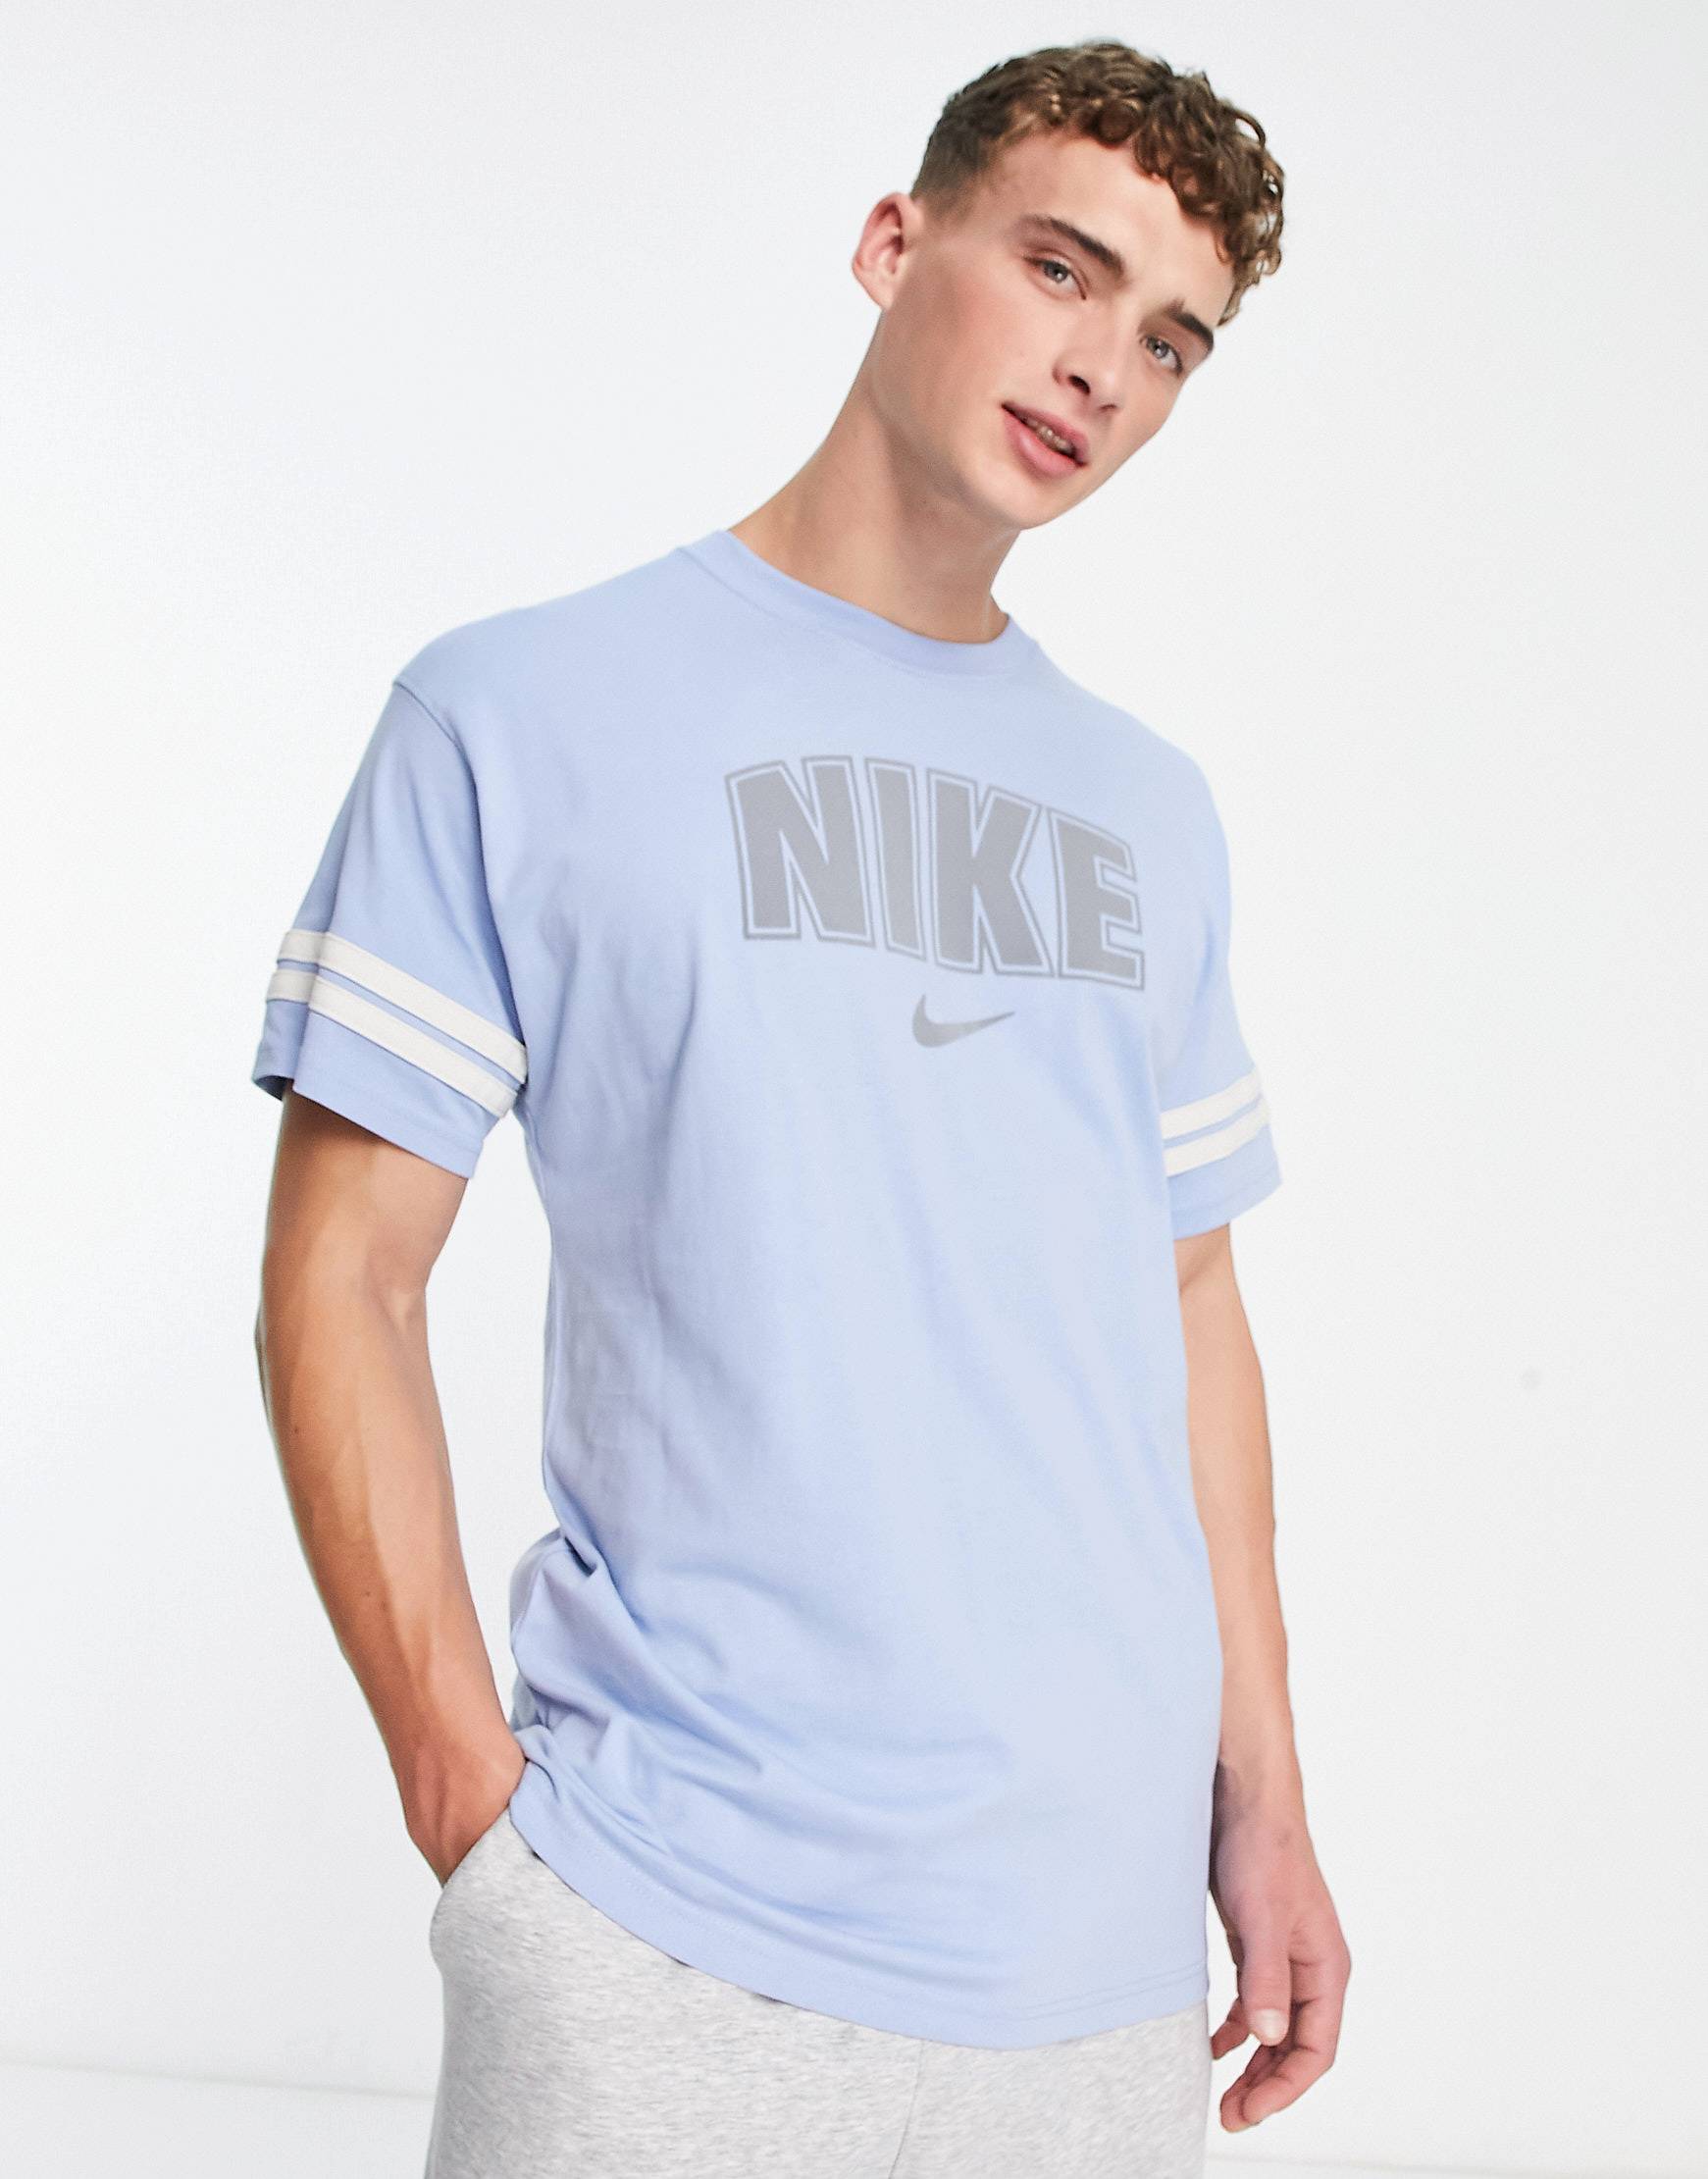 Футболка Nike Retro Print, голубой футболка nike with retro chest print голубой